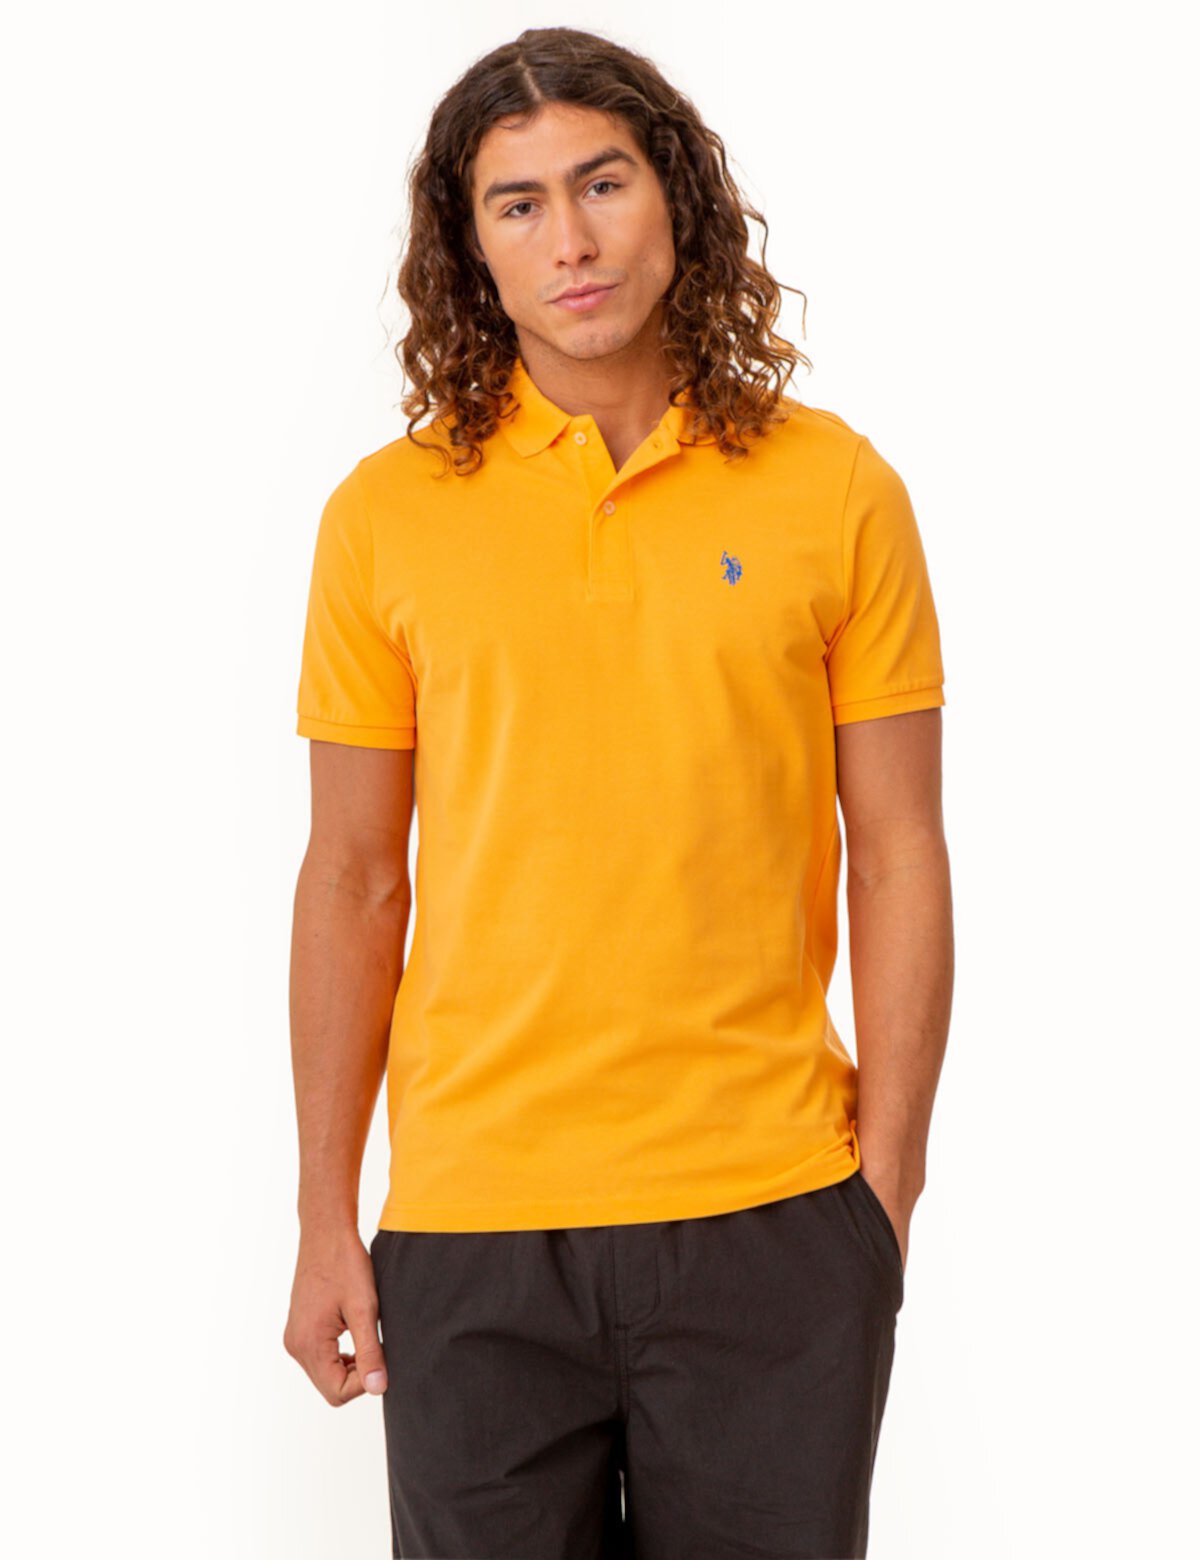 Мужская футболка-поло U.S. Polo Assn. Пике с маленьким логотипом U.S. POLO ASSN.